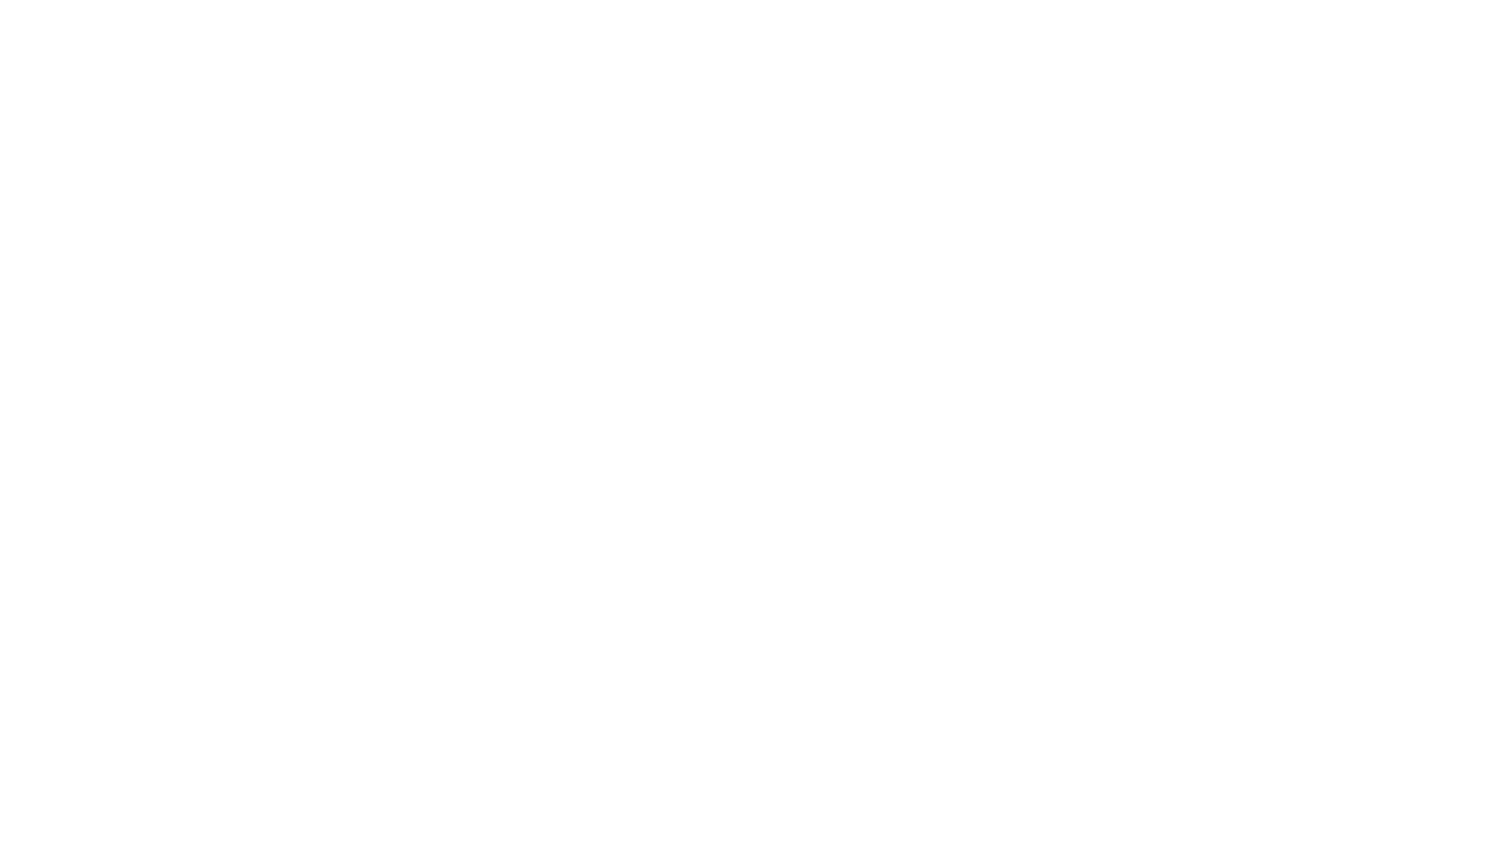 First Baptist Church of Centralia